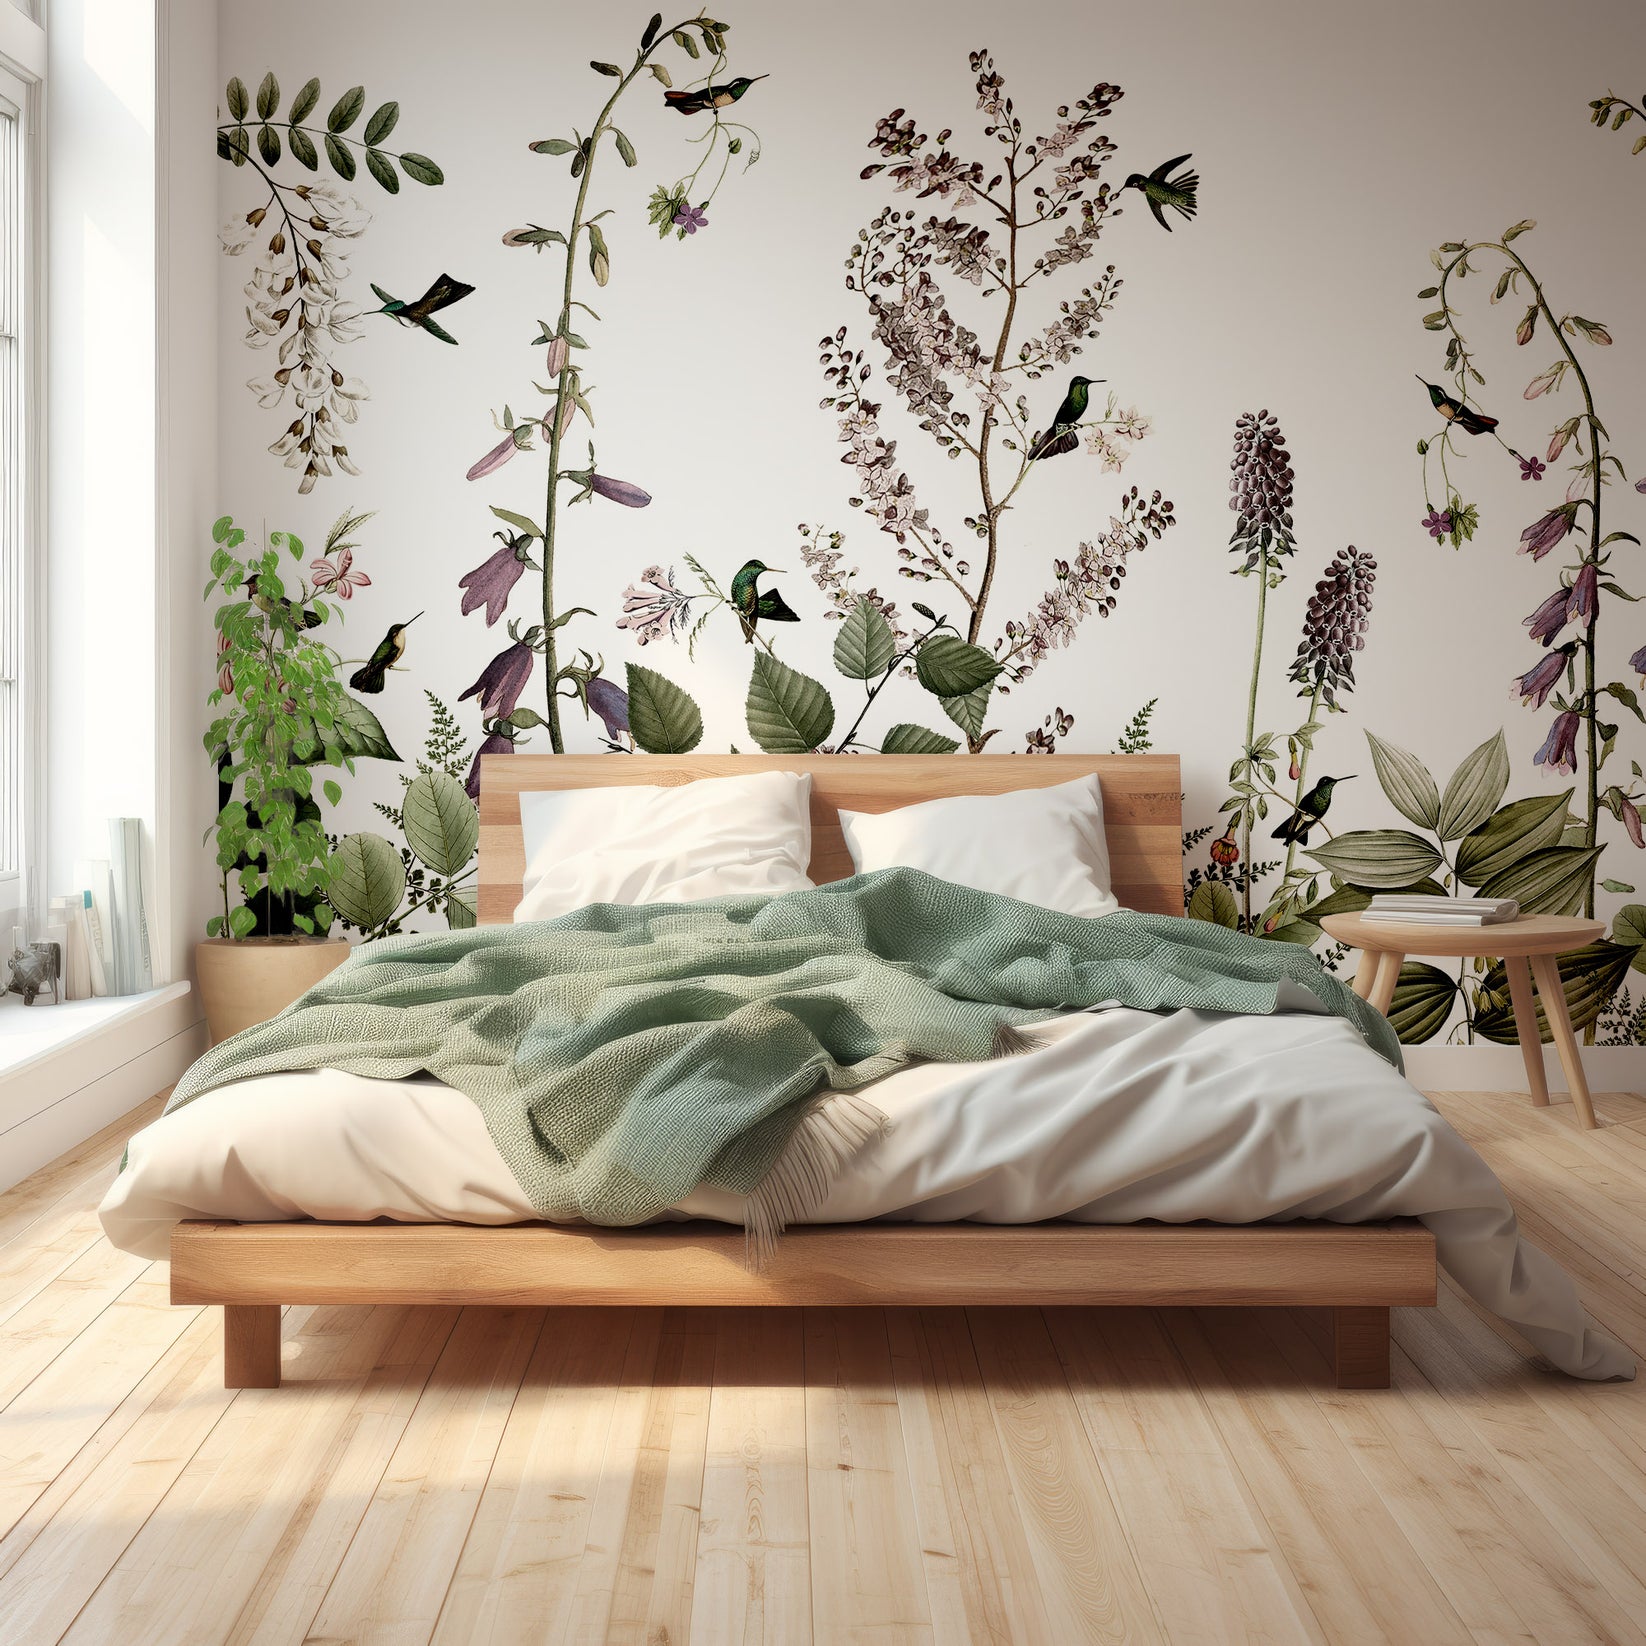 Secret Garden Floral Plant Wallpaper In Bedroom With Great Lighting With Green Queen Size Beds And Wooden Floor